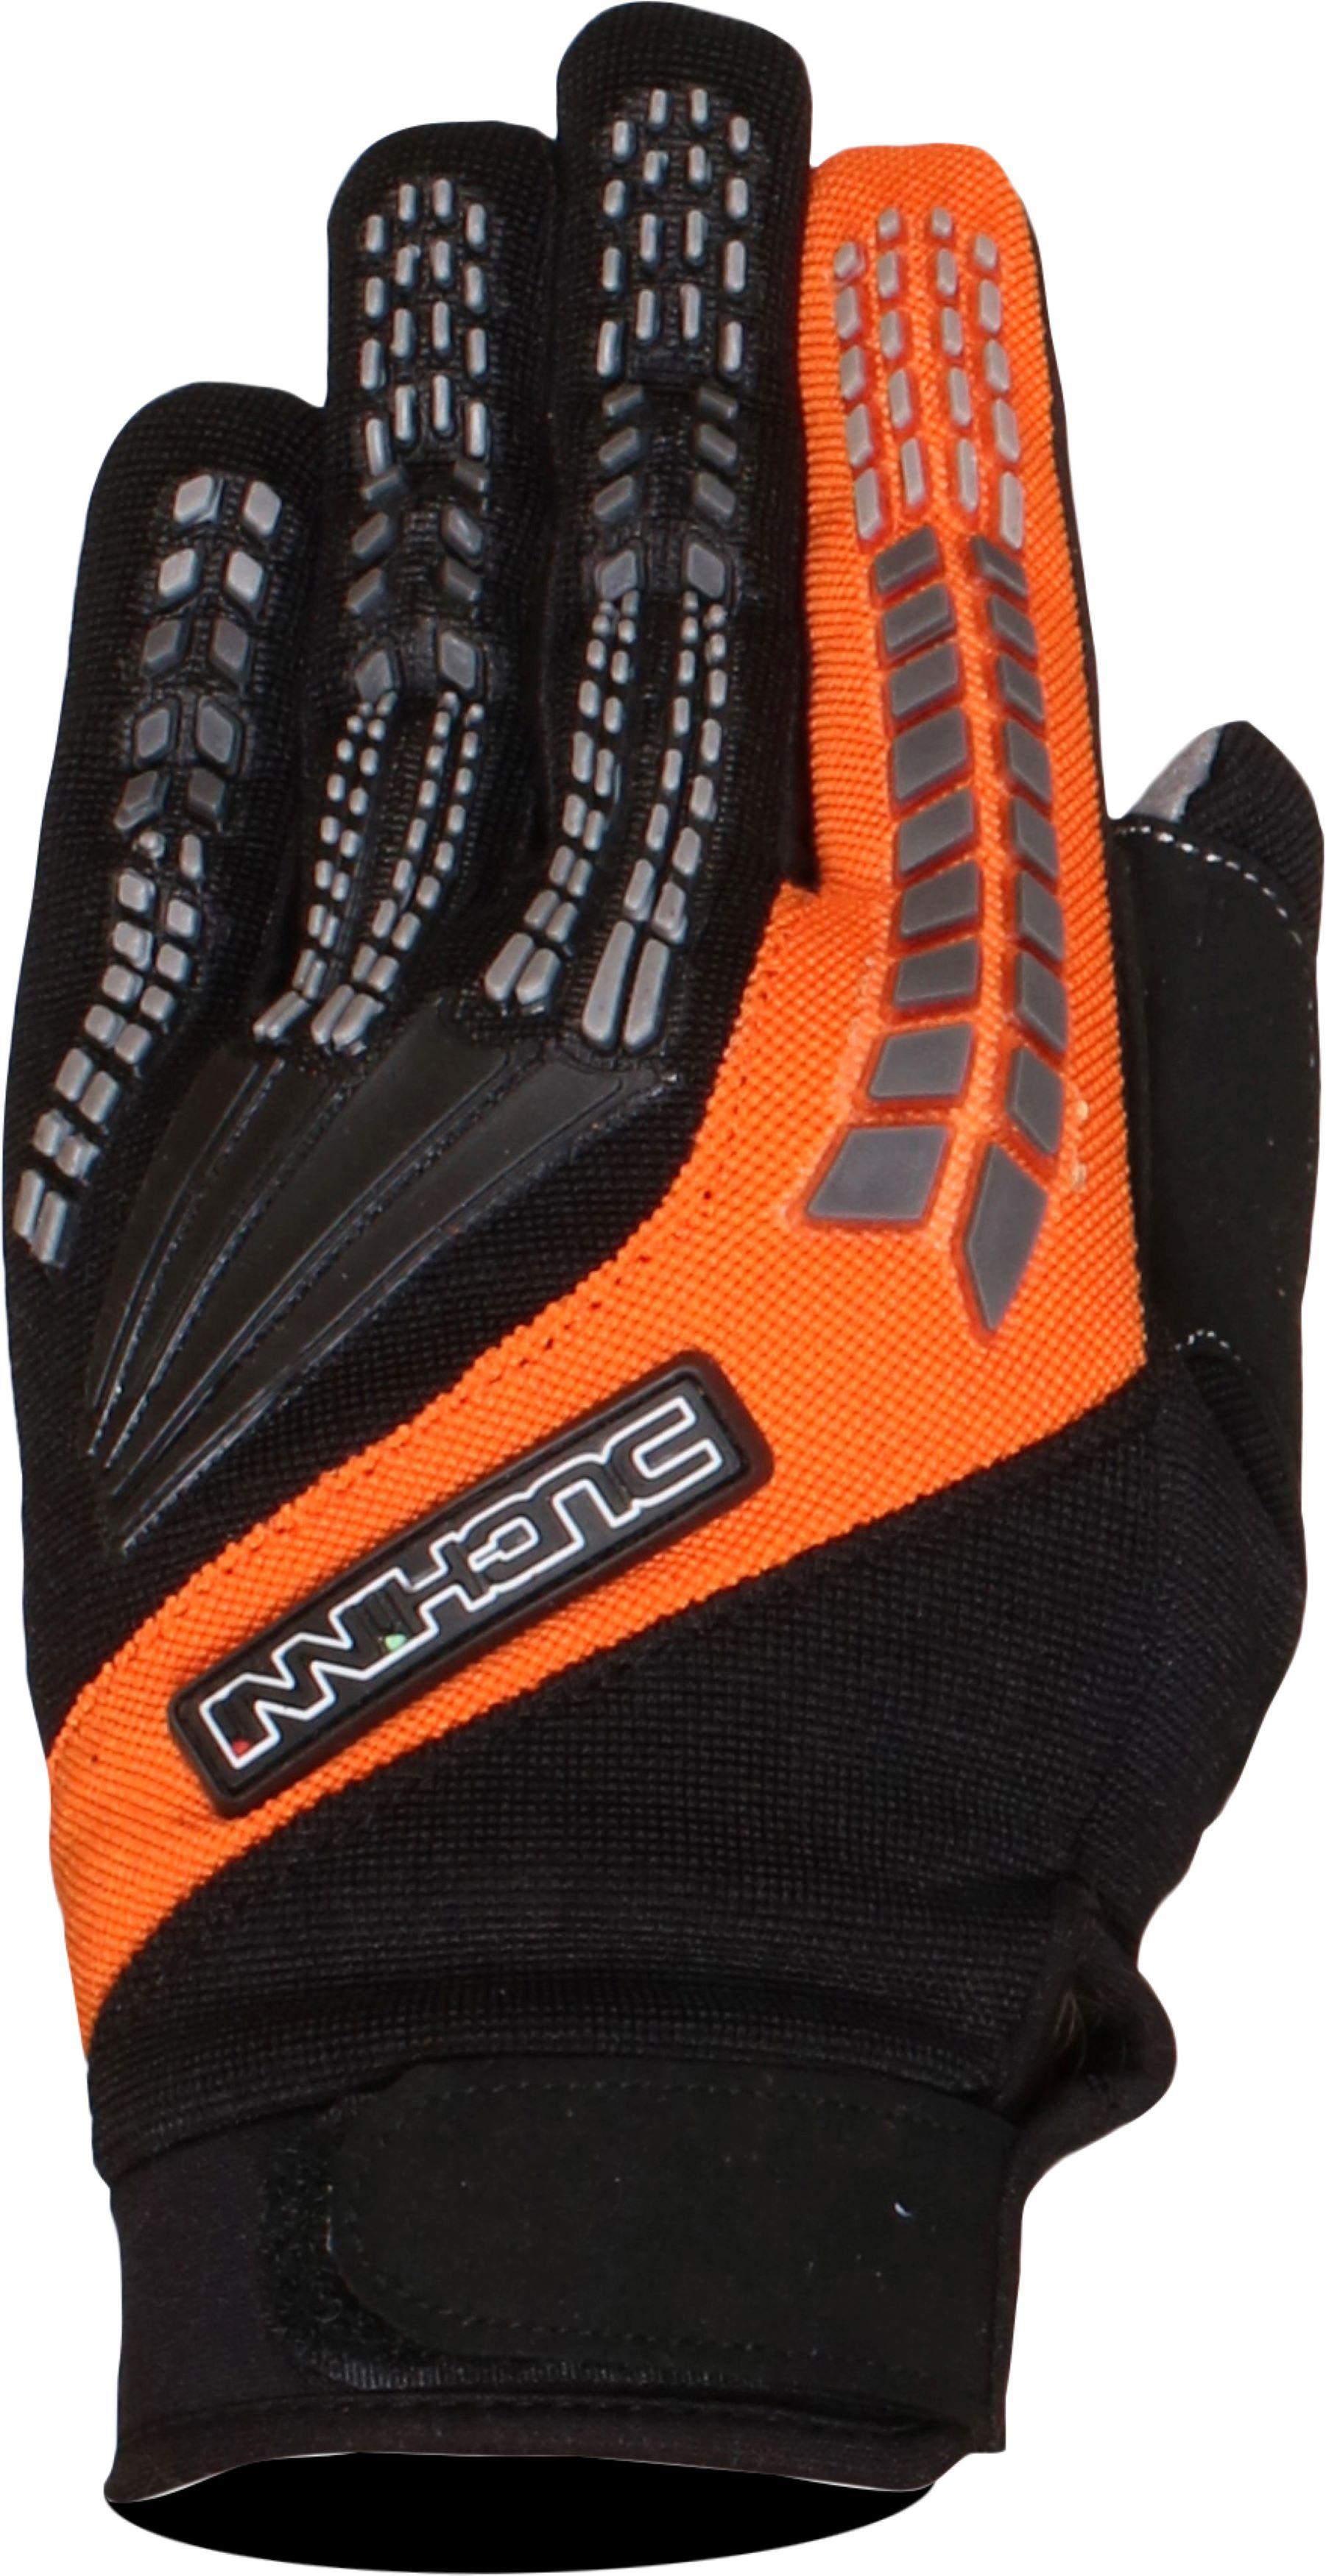 Duchinni Focus Motorcycle Gloves - Black And Orange, S